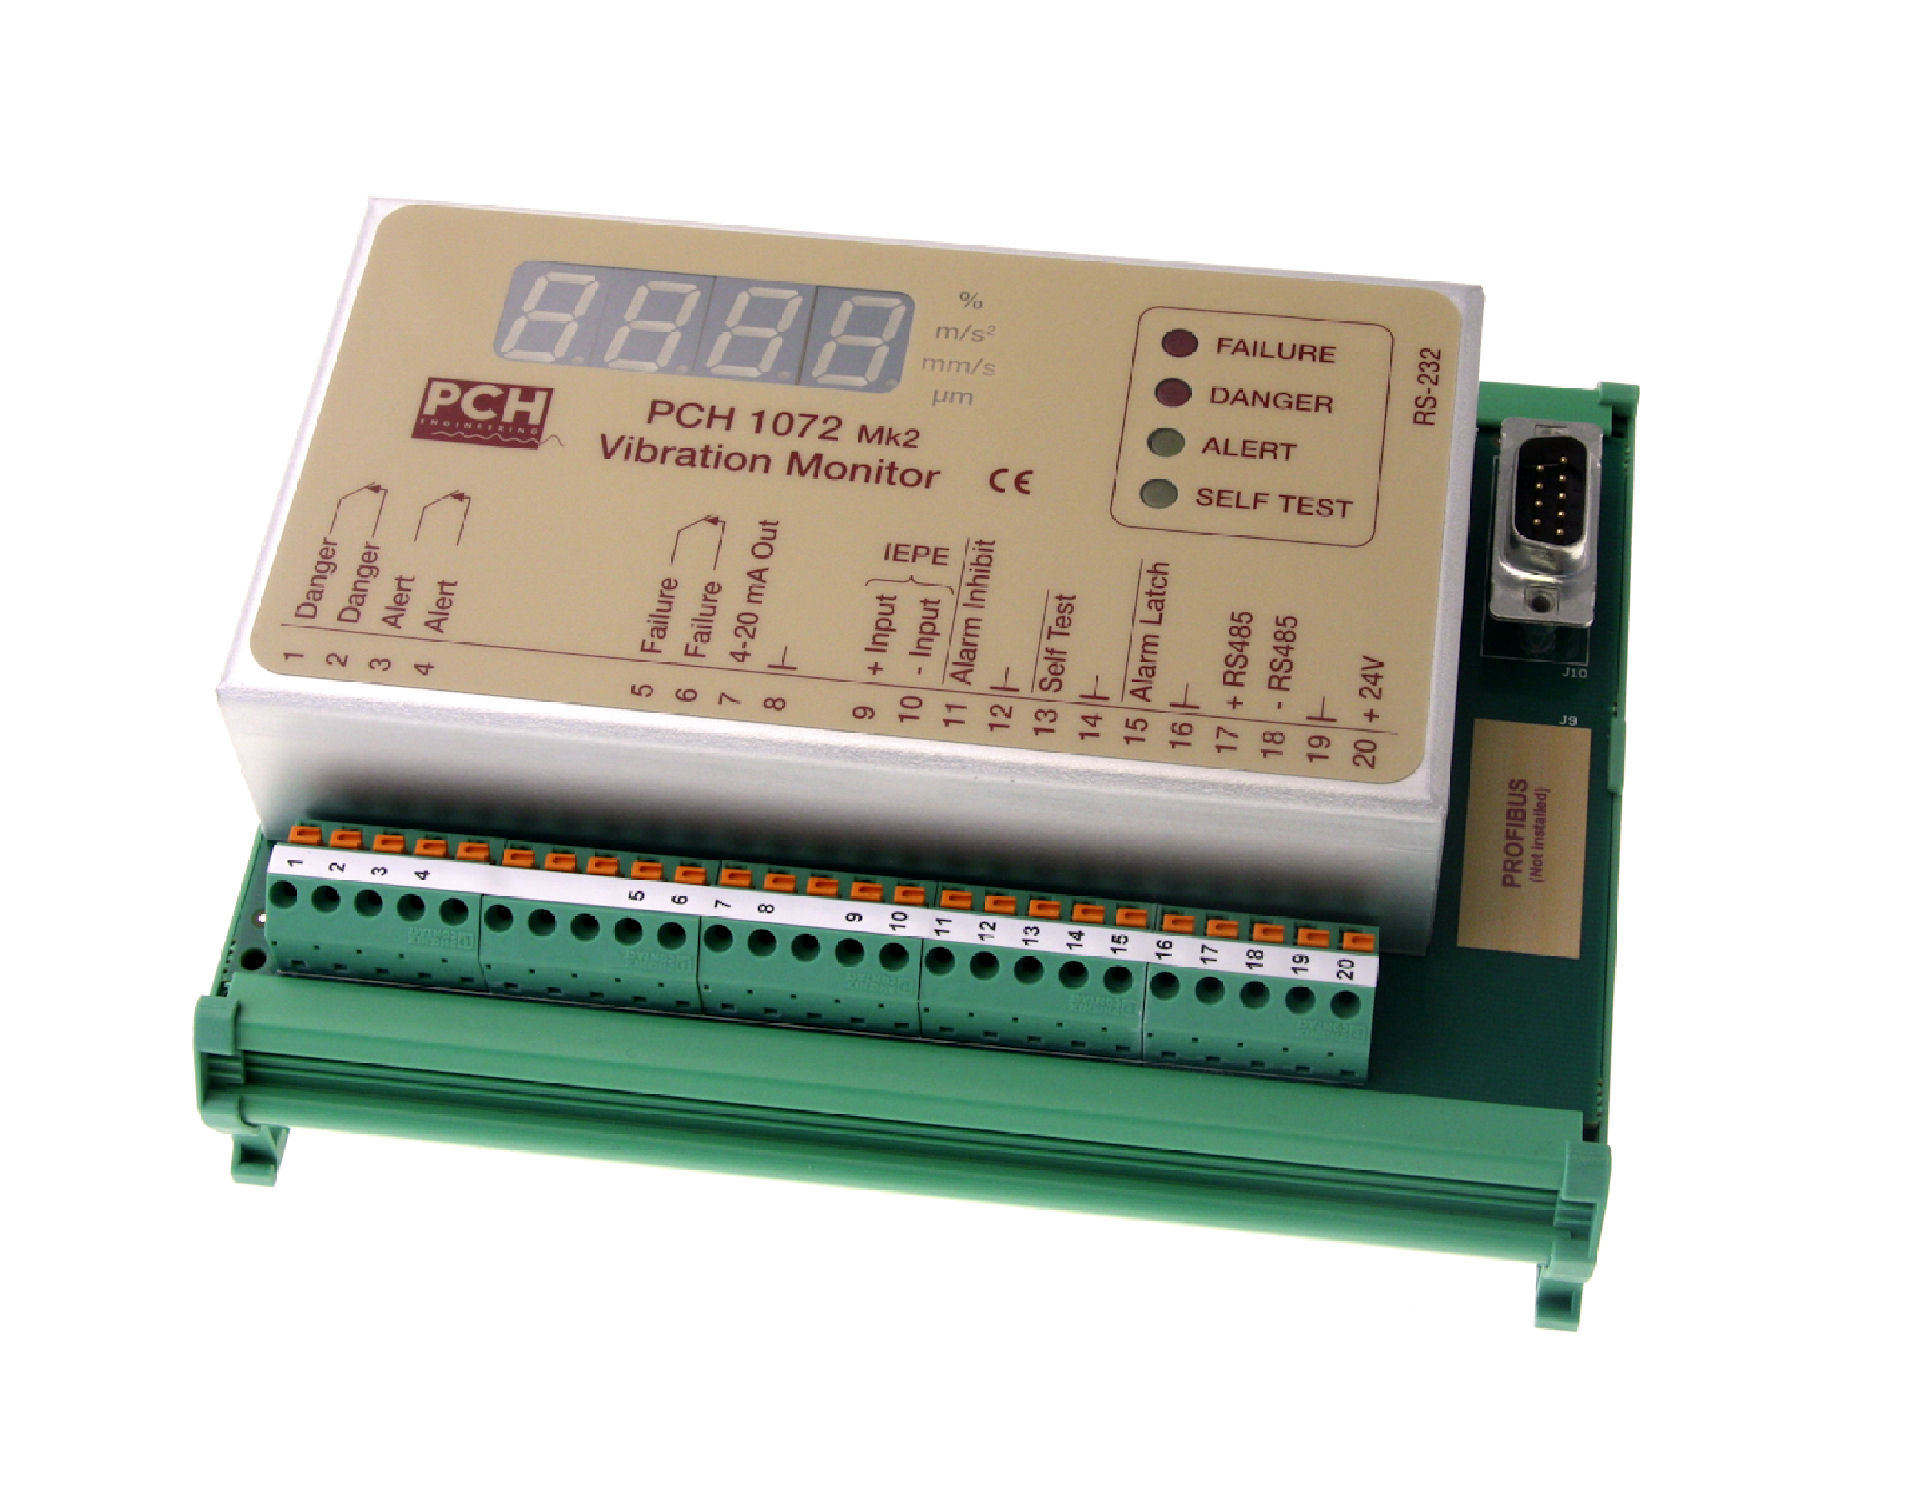 PCH 1072 Vibration Monitor